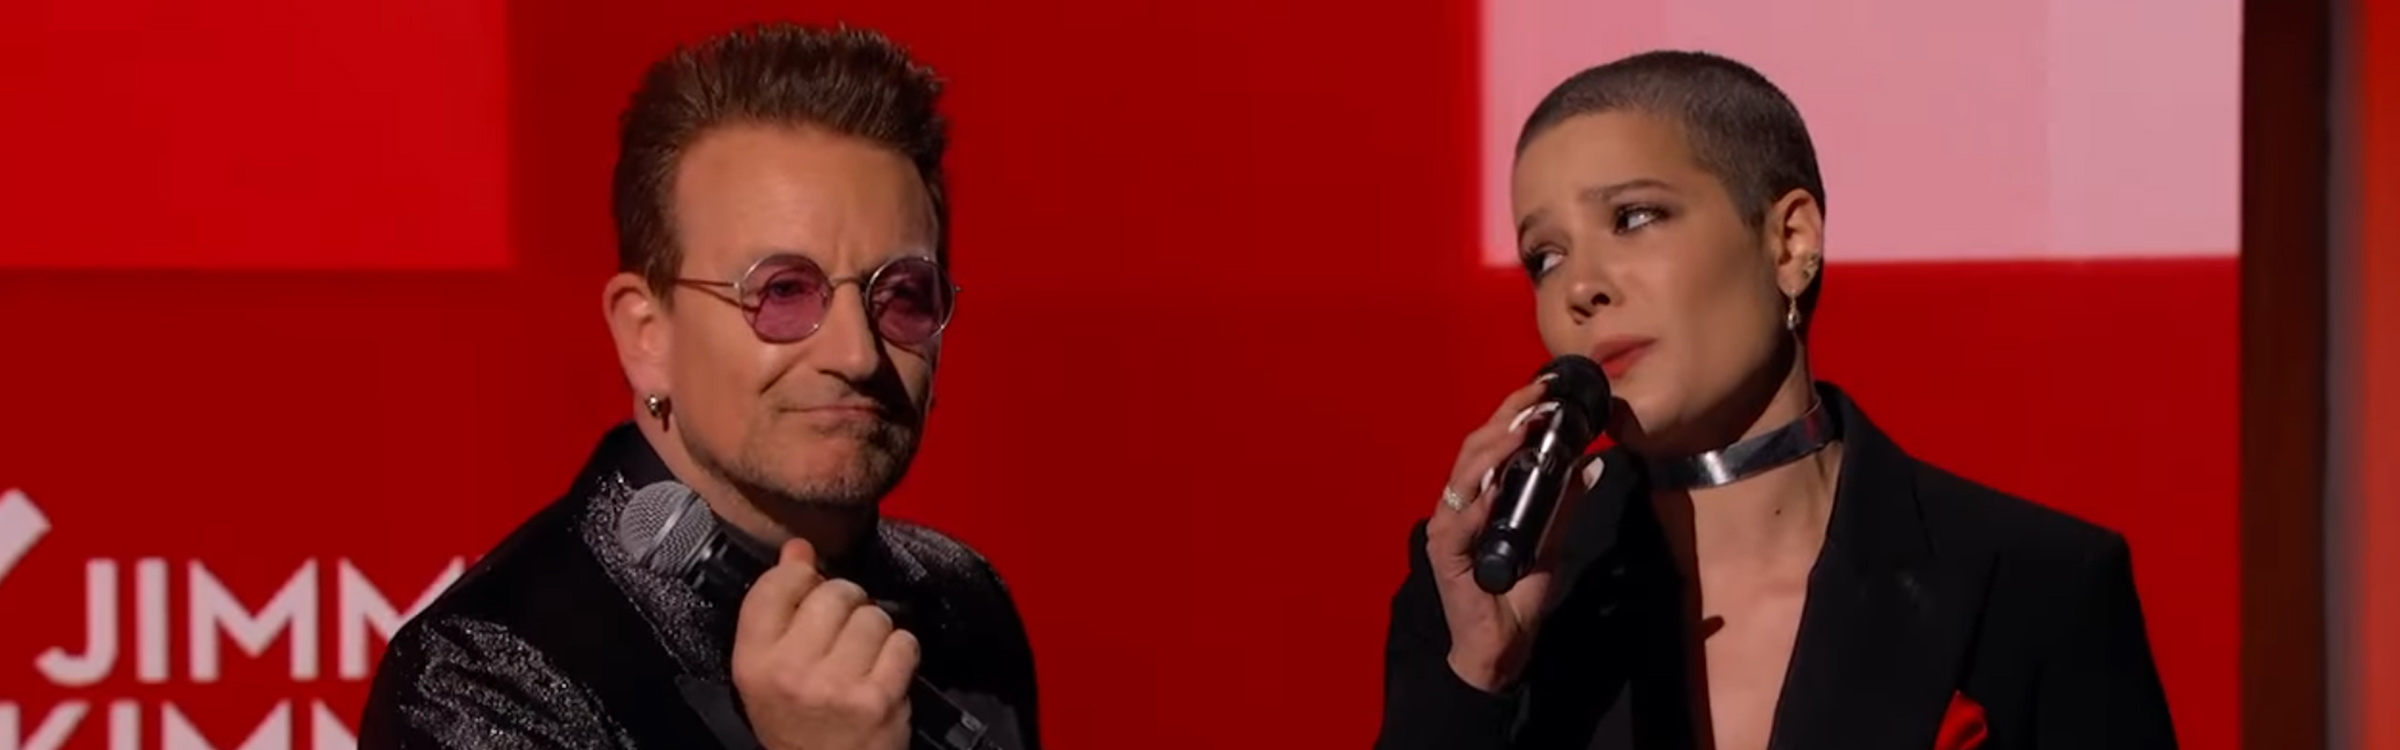 Bono halsey header